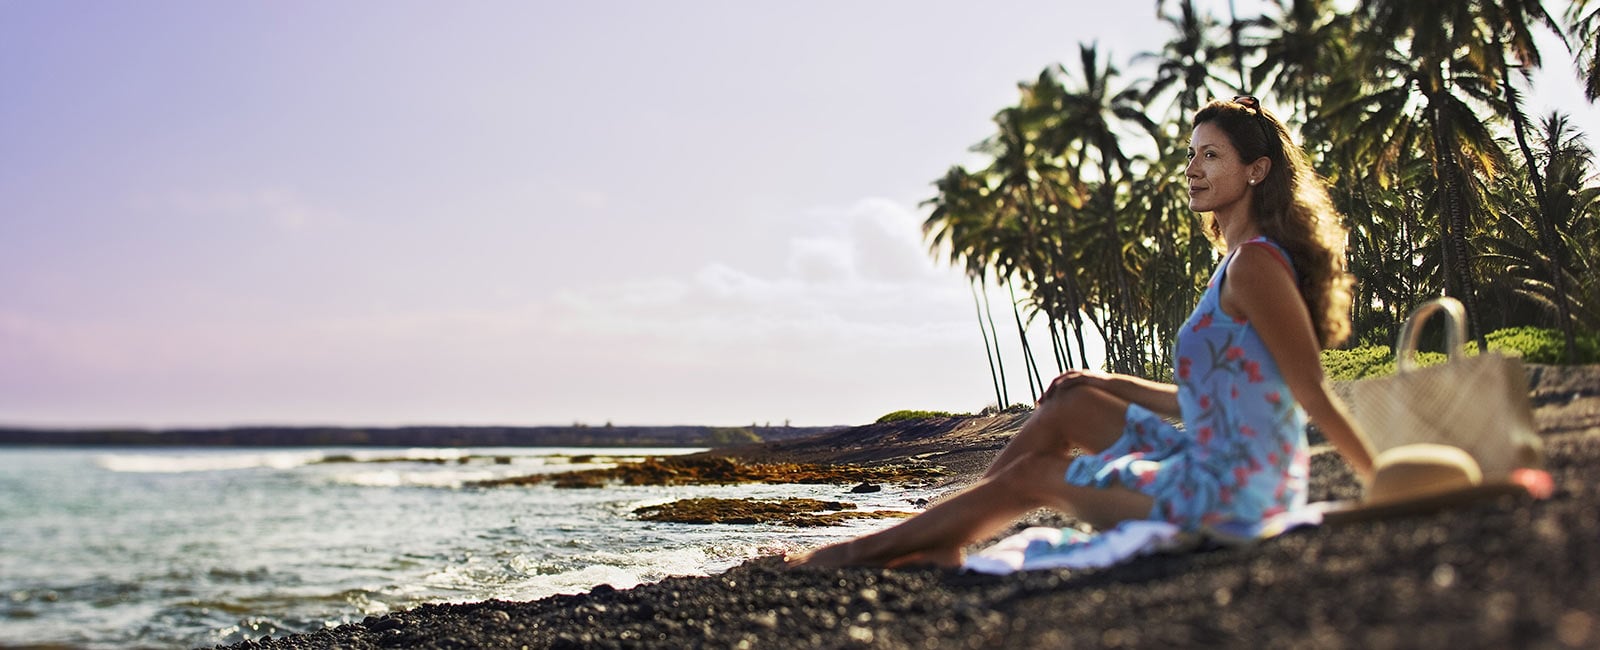 Enjoy black sand beaches on a Hawaiian vacation with Hilton Grand Vacations